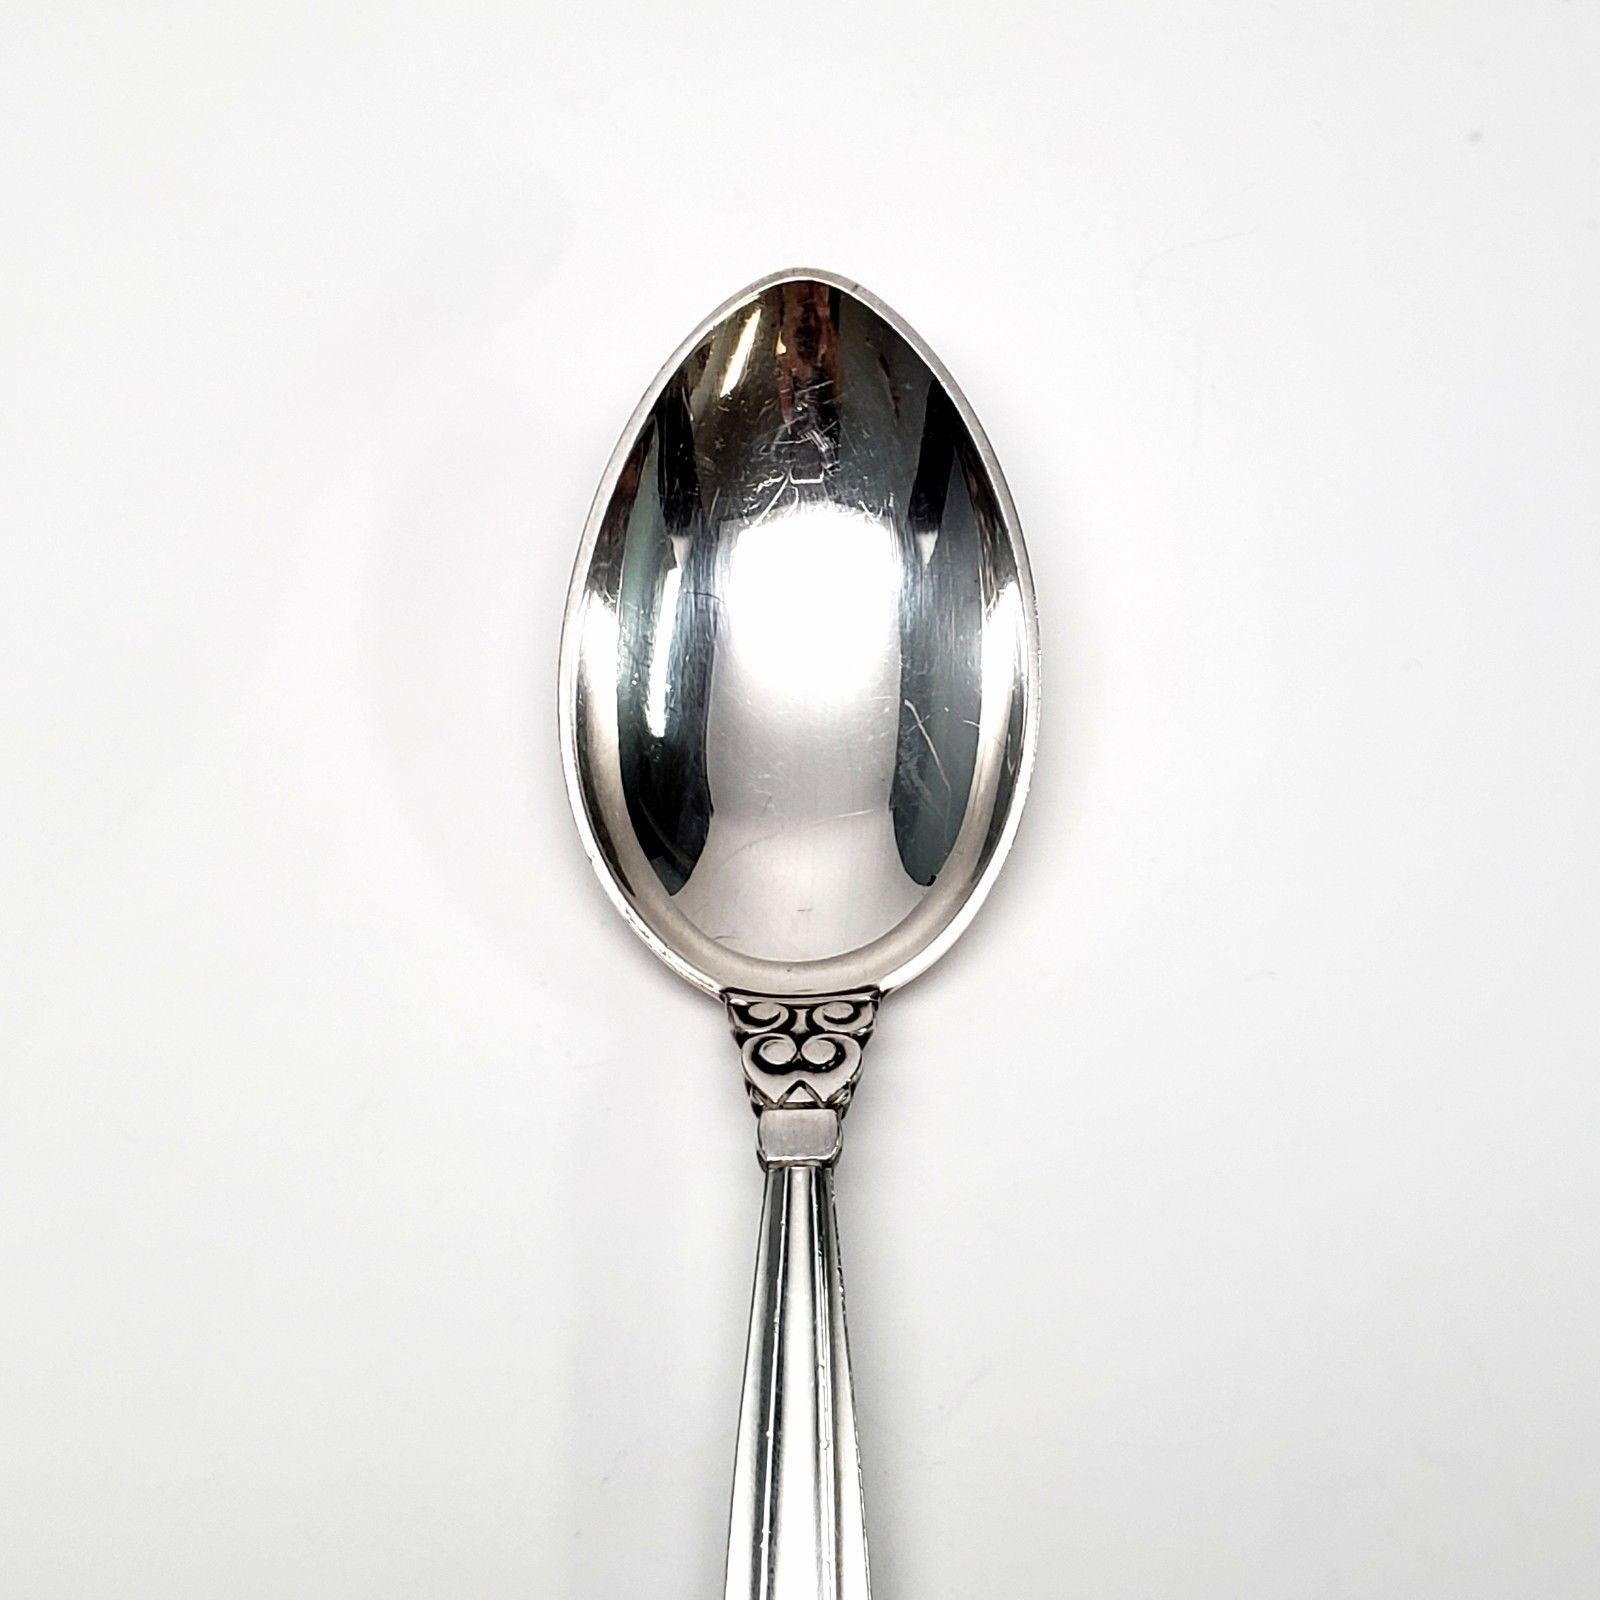 Danish Georg Jensen Denmark Acorn Sterling Silver Large Teaspoon with Engraving